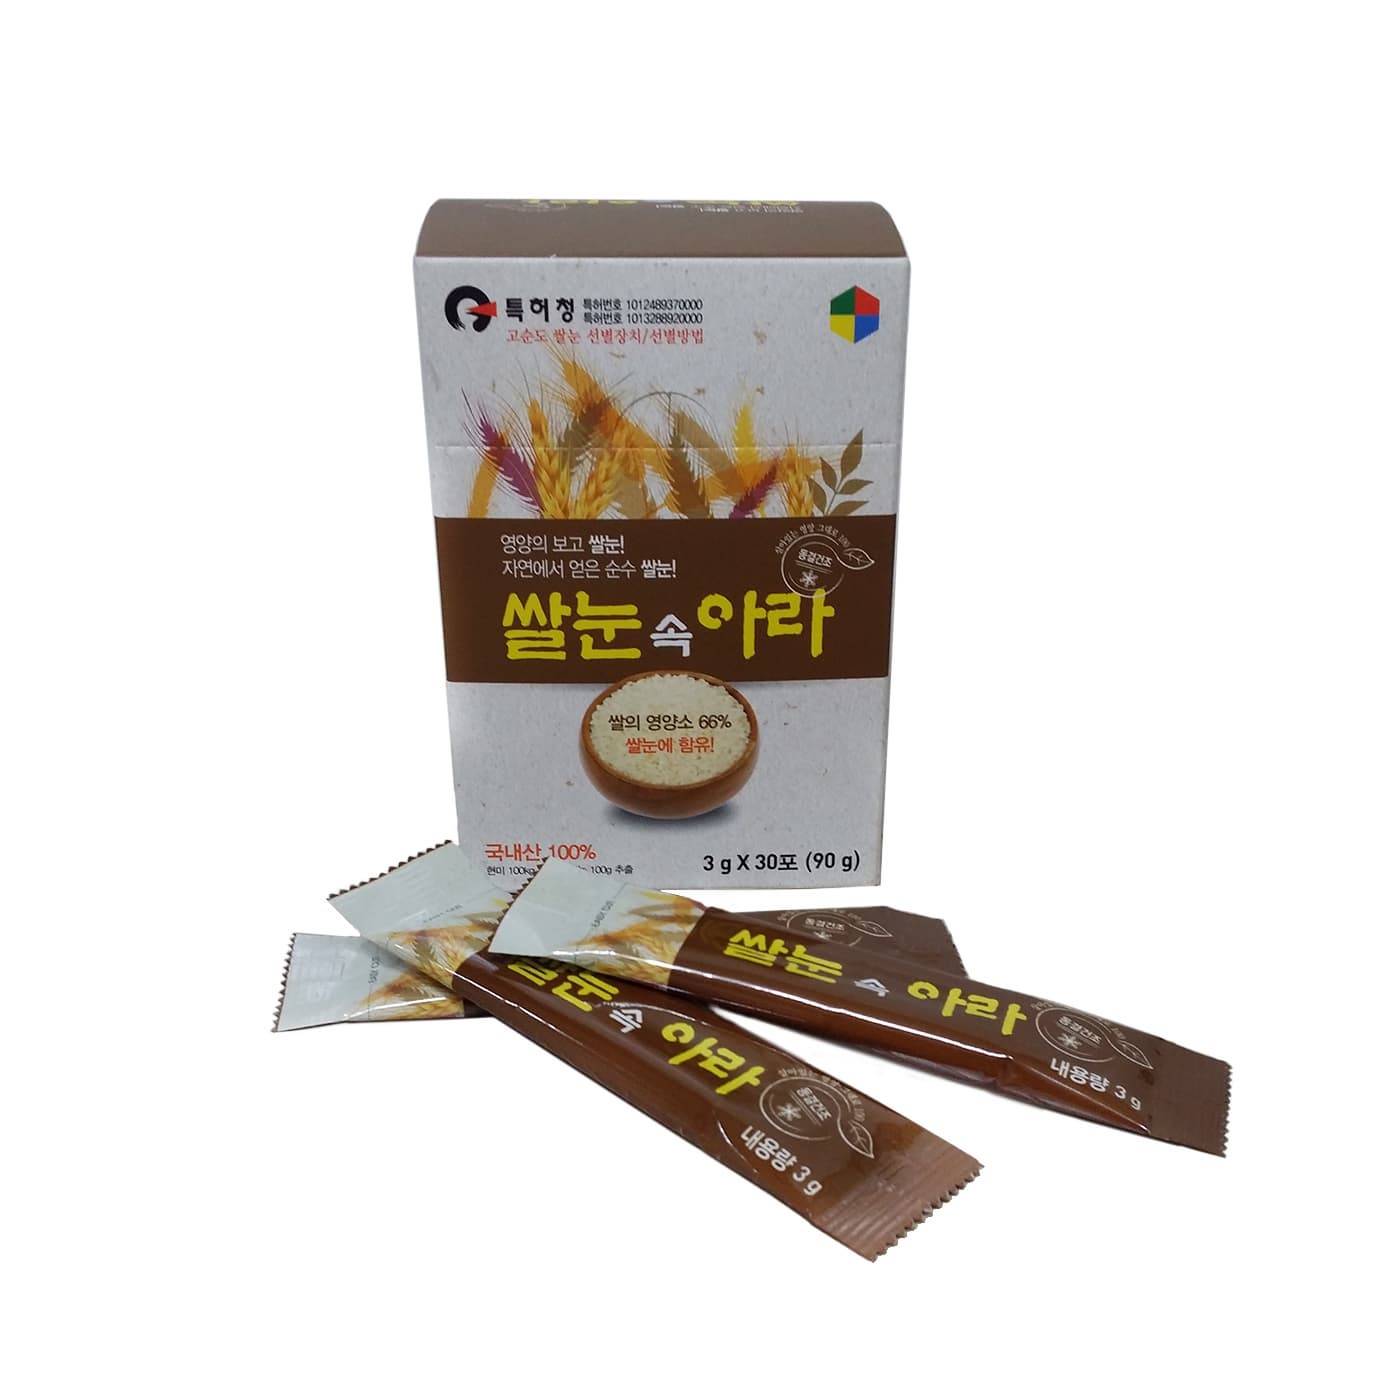 RICE Stick -Freeze-dried rice germ stick-